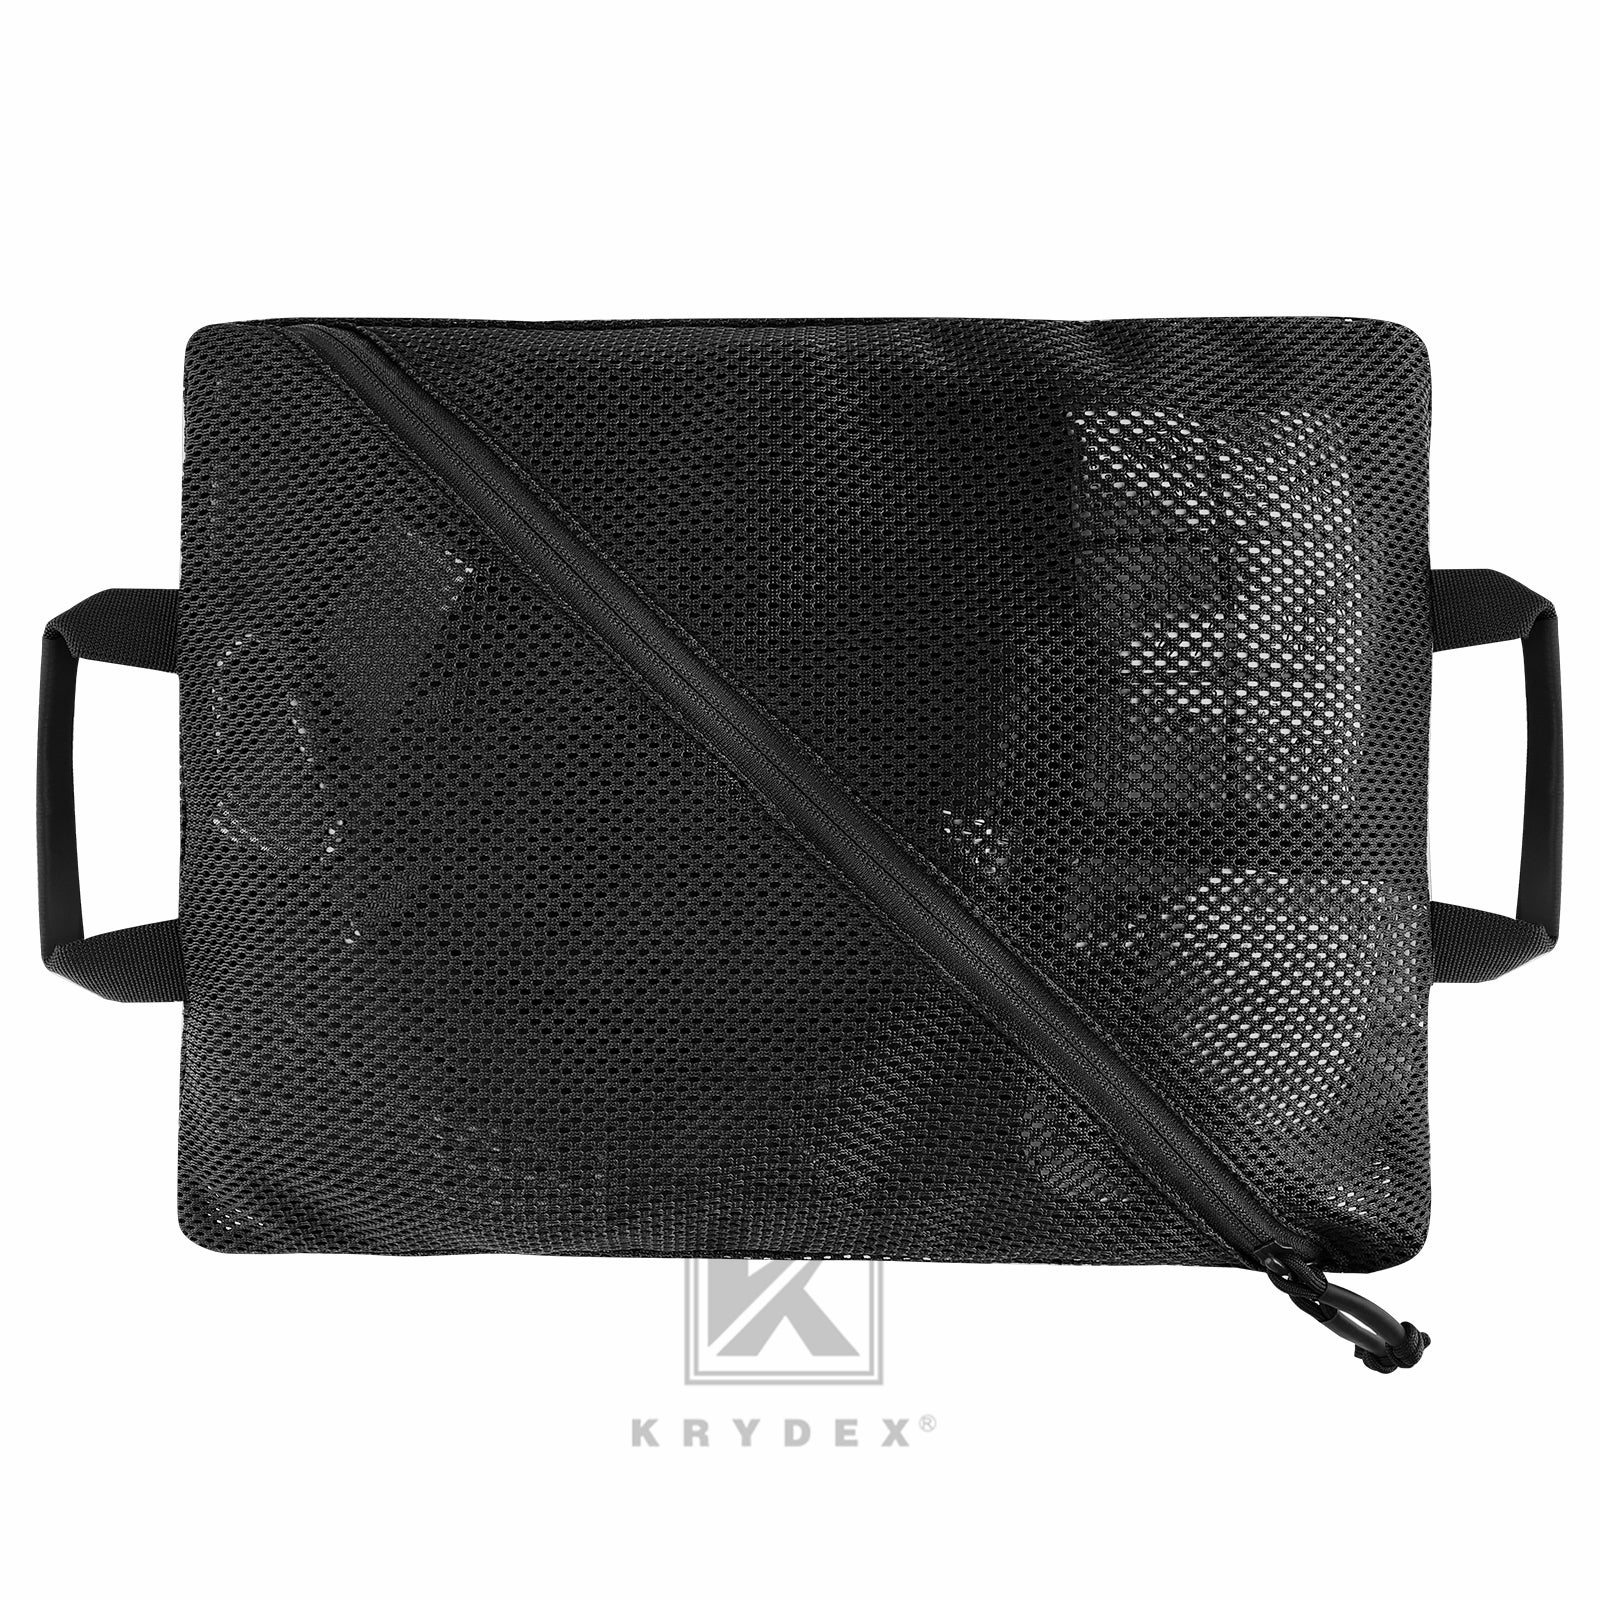 Krydex Tactical Storage Mesh Pouch Set Travel Organizer EDC Bag